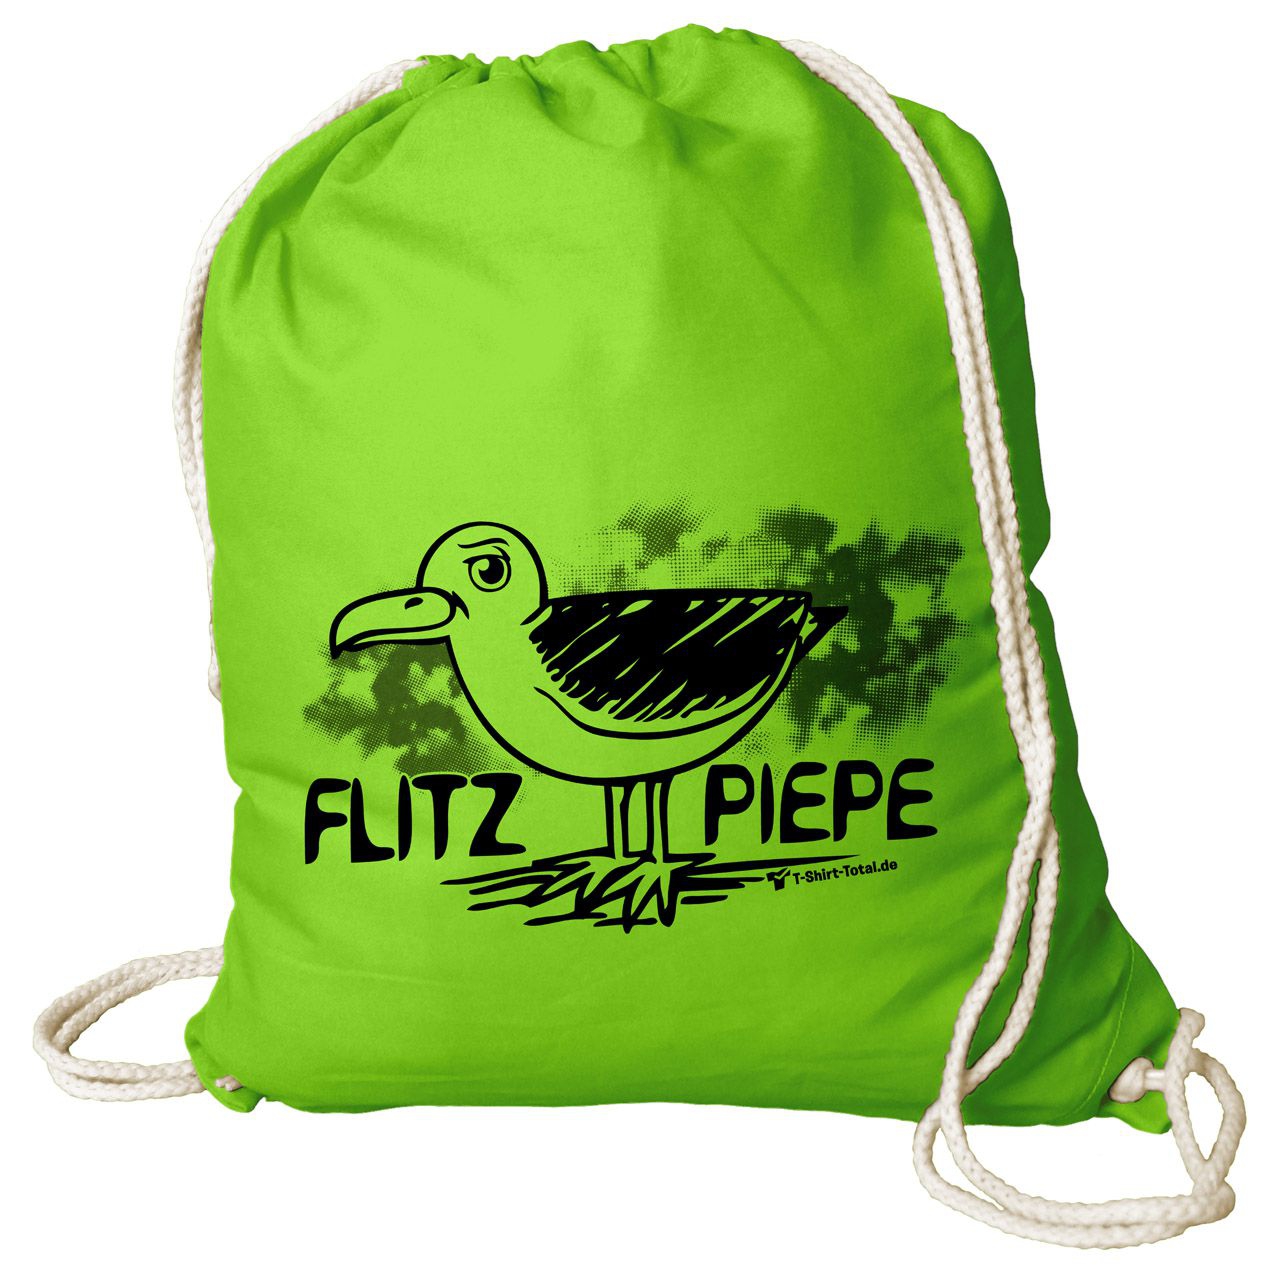 Flitzpiepe Rucksack Beutel hellgrün